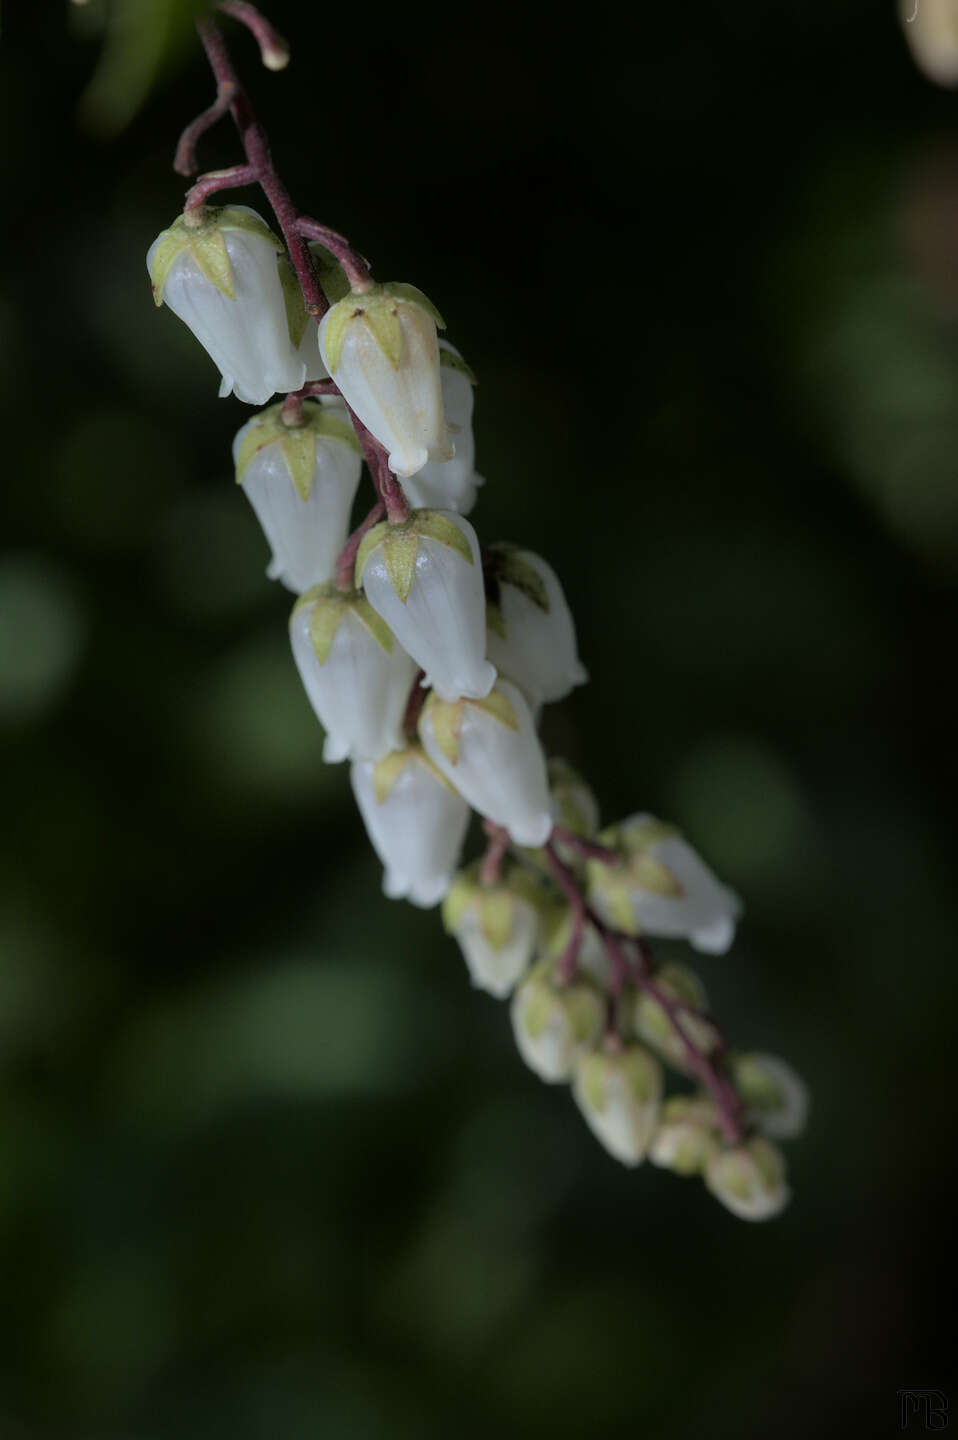 White flower buds on branch